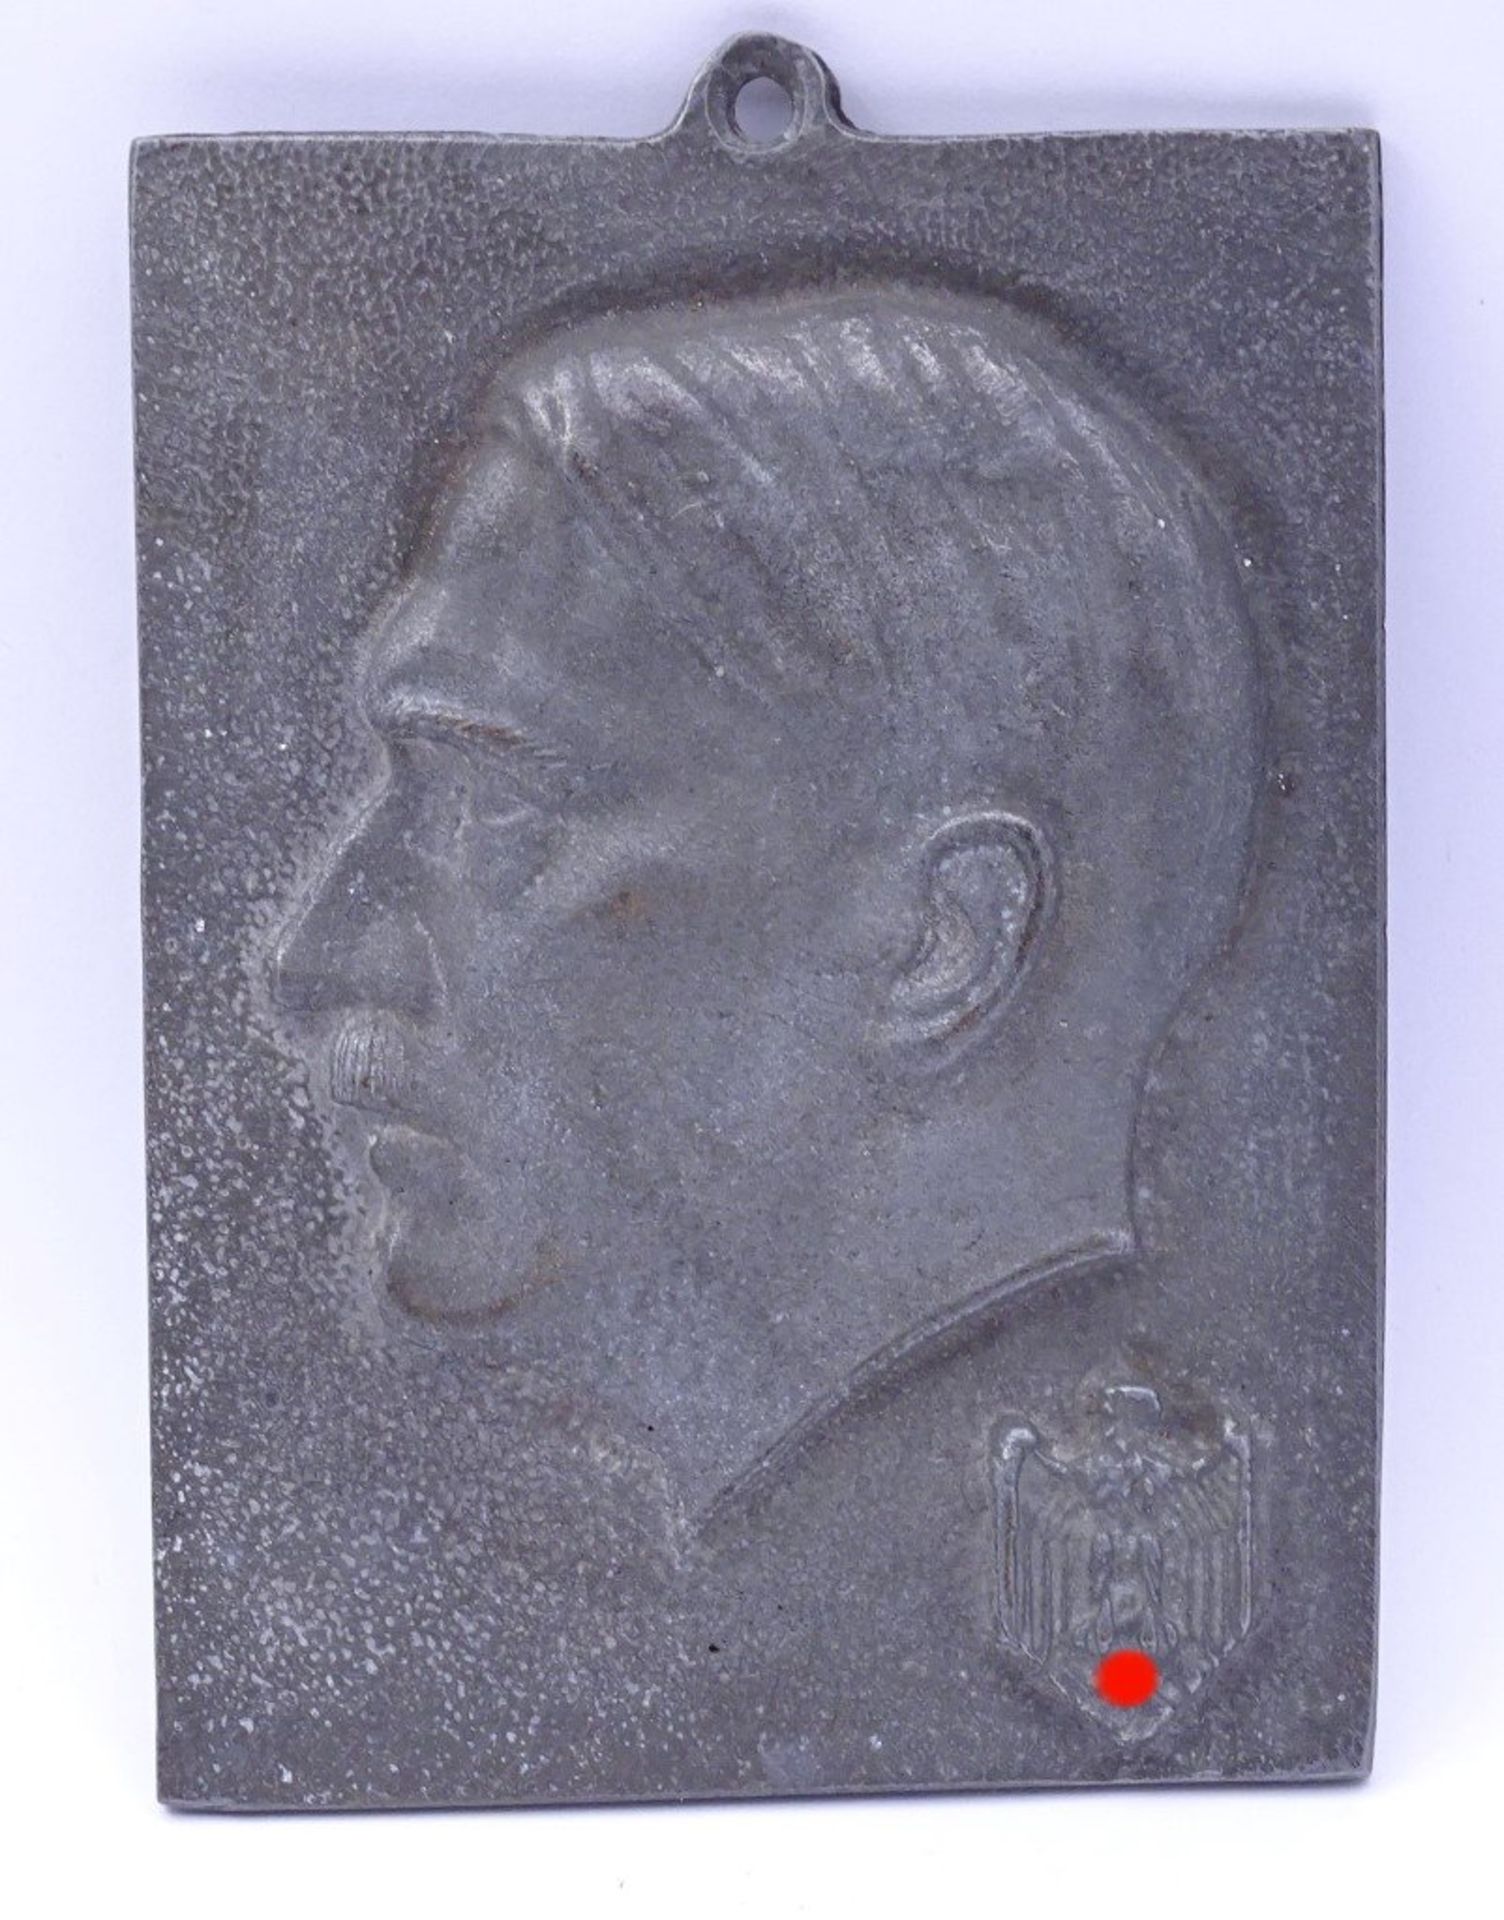 Wandplakette Adolf Hiter 11x8cm